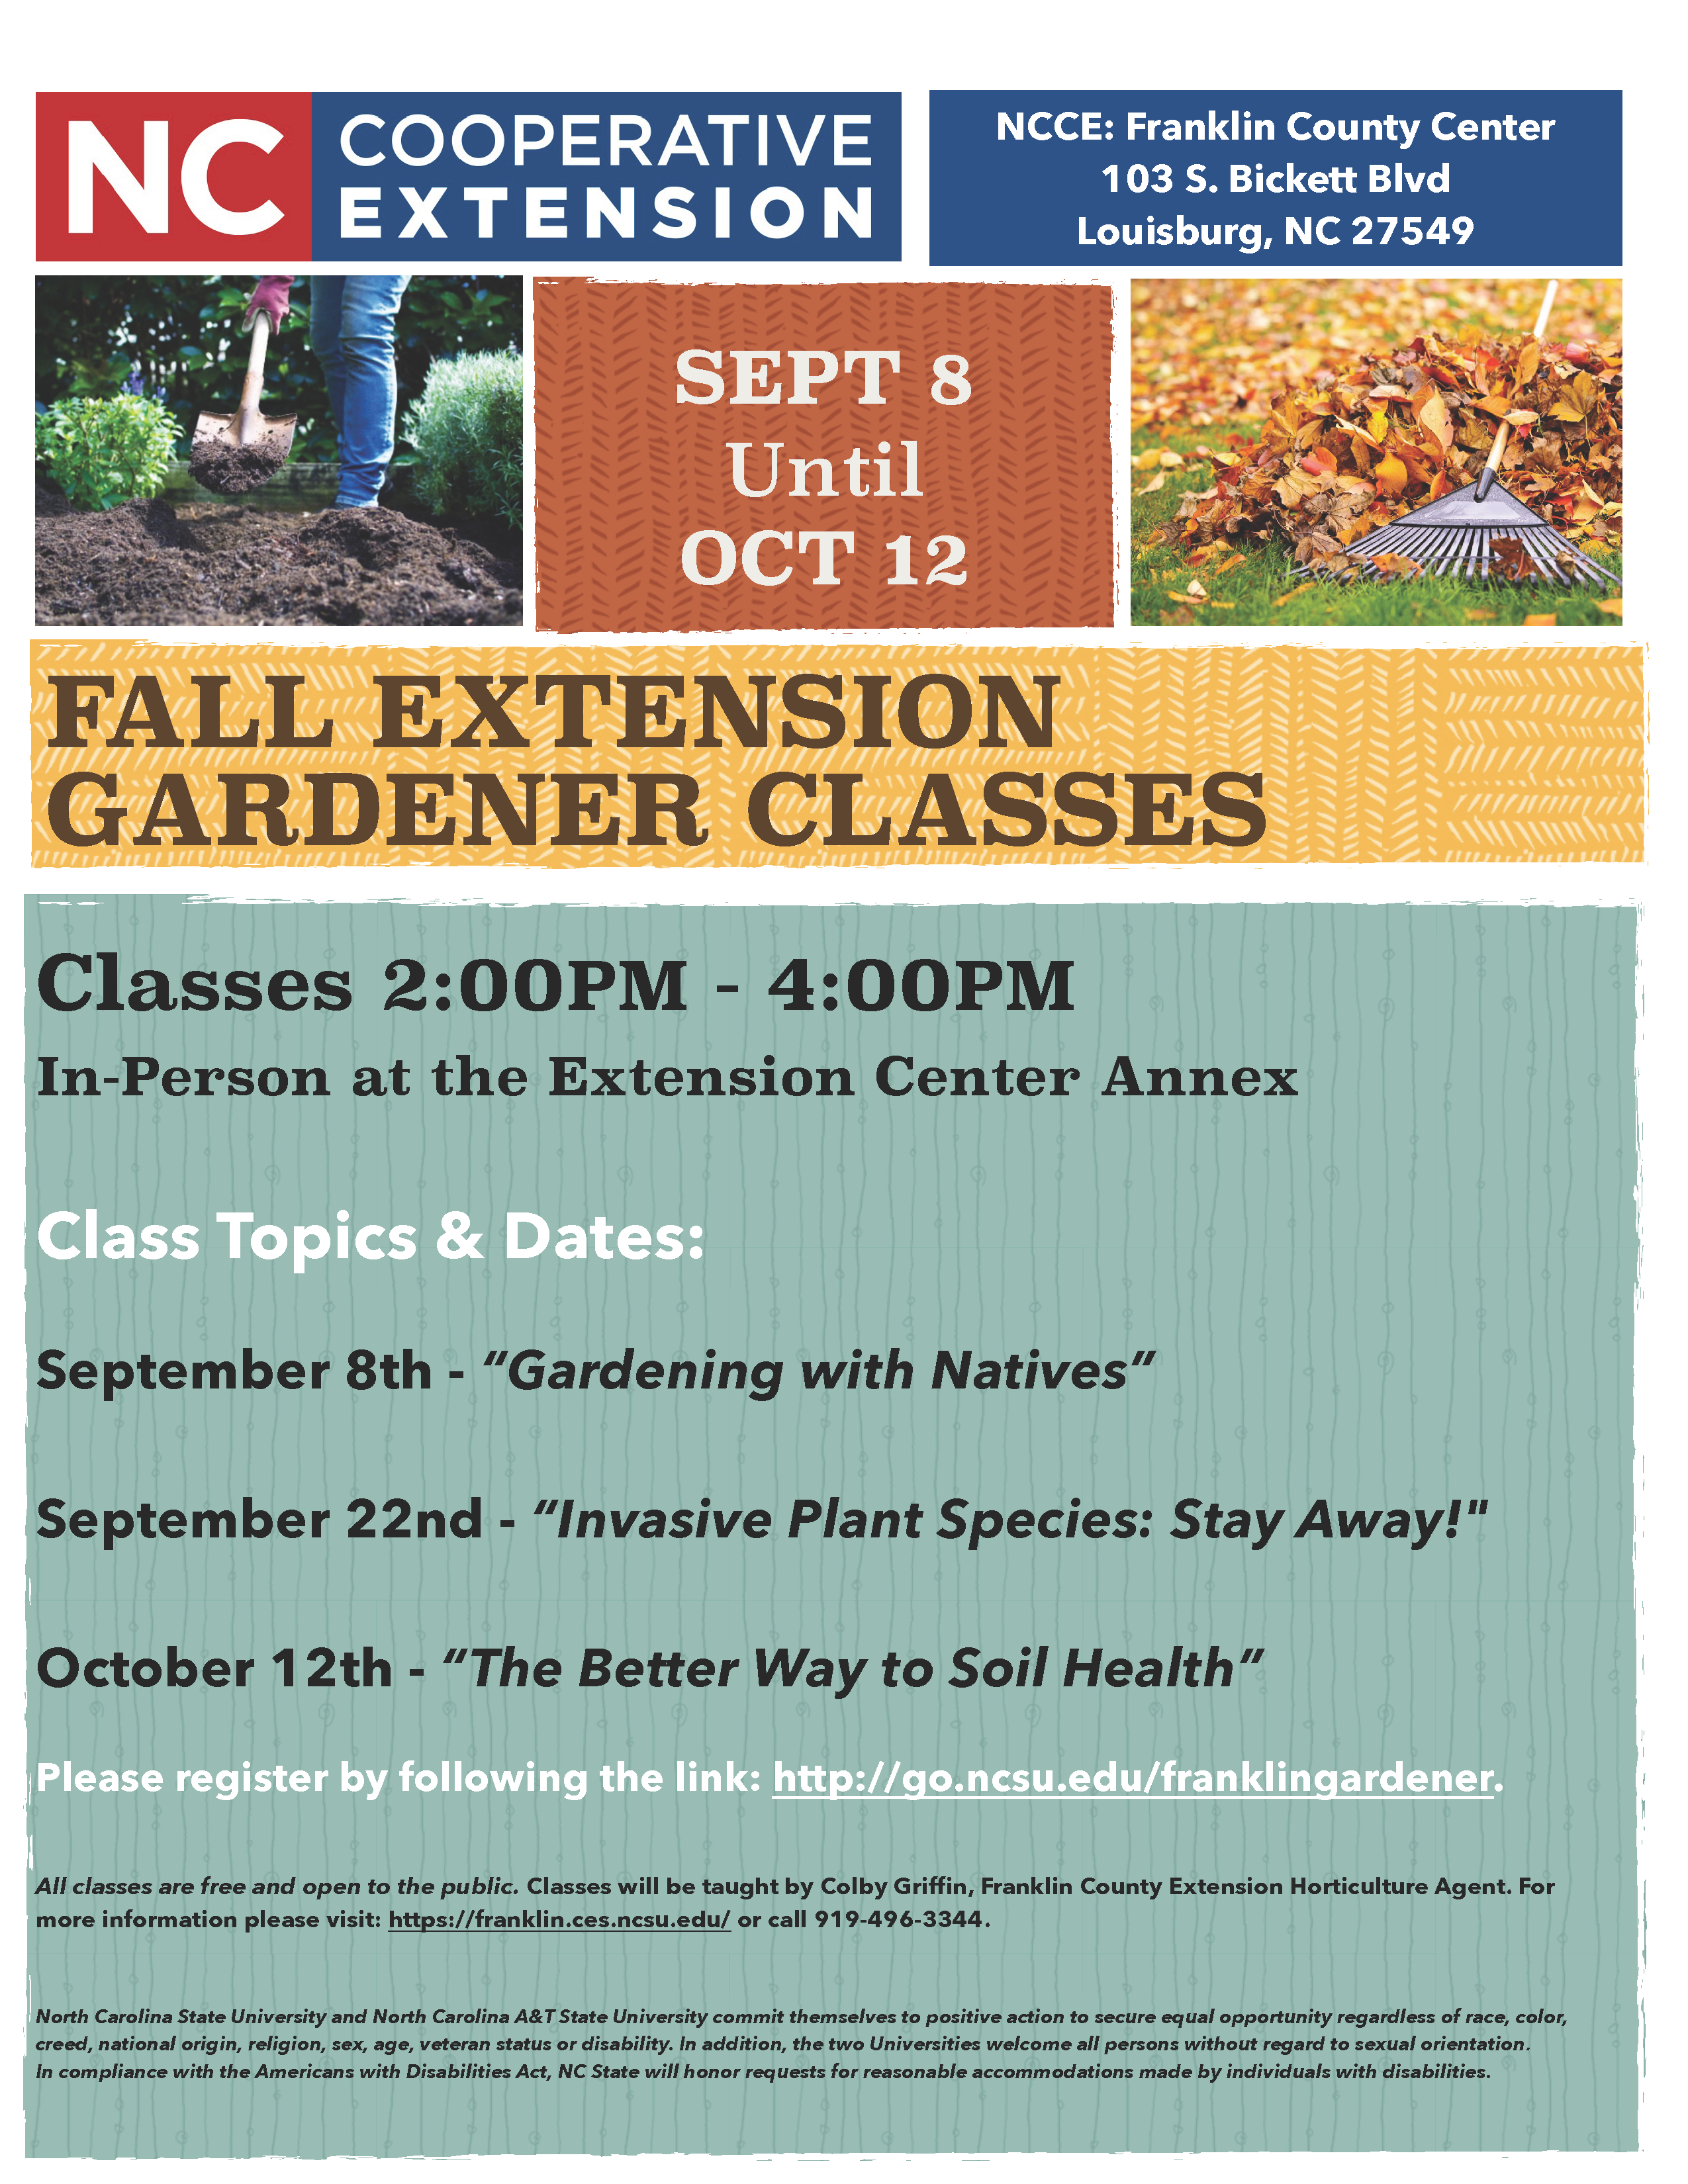 Fall 2022 Extension Gardener Class flyer dates and registration info